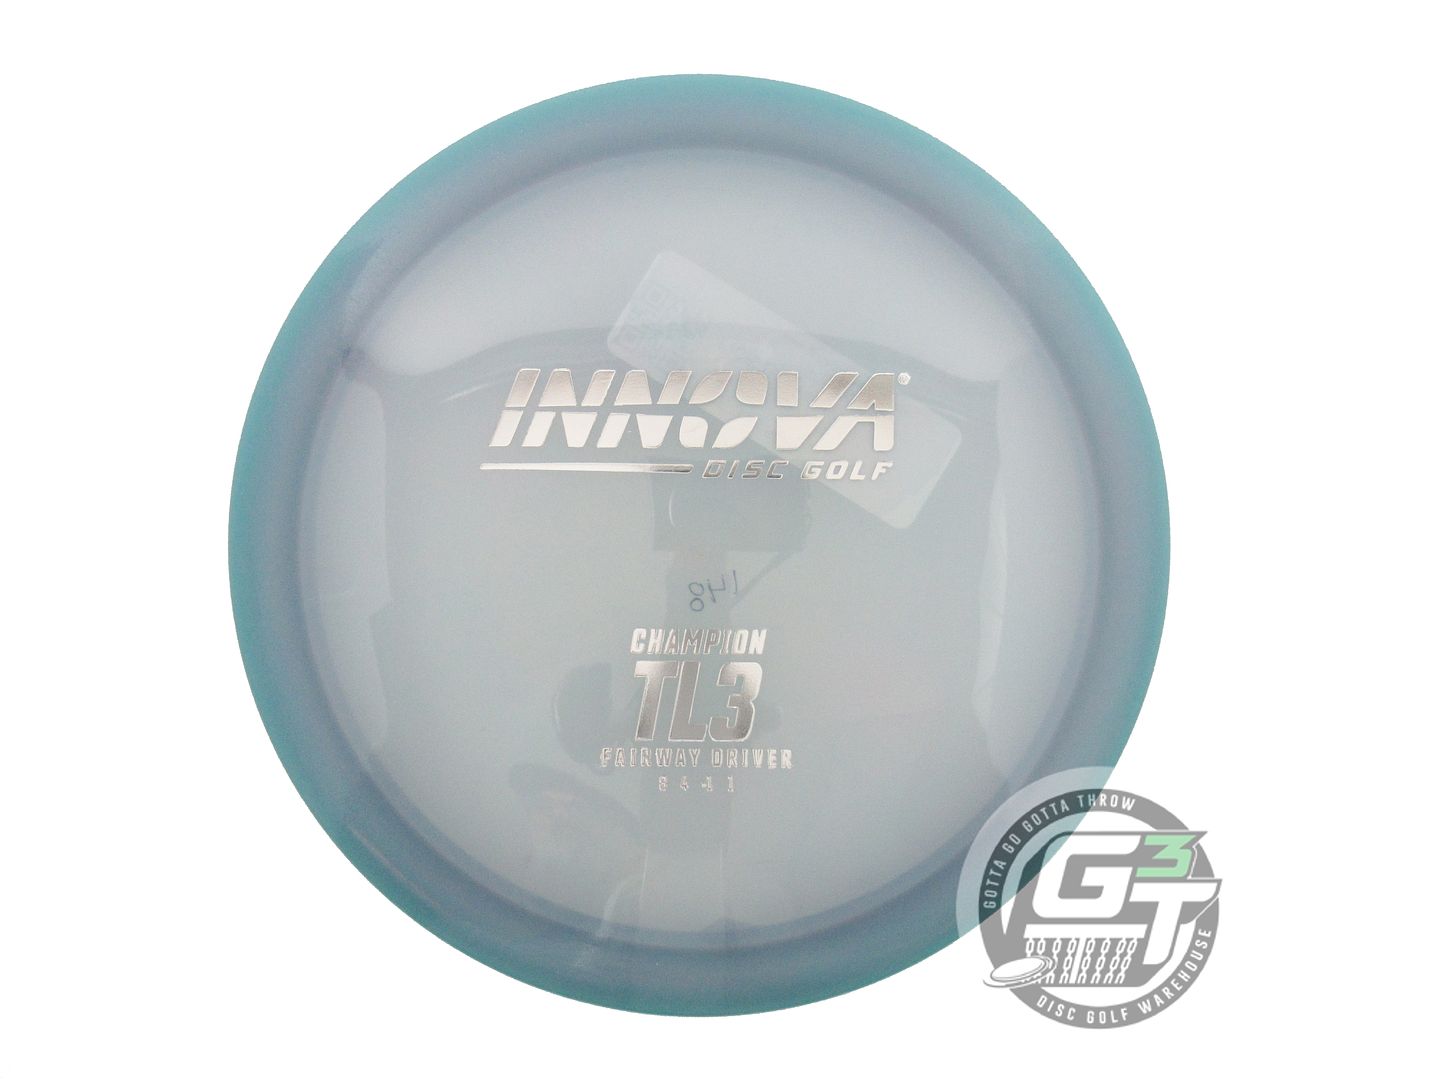 Innova Champion TL3 Fairway Driver Golf Disc (Individually Listed)